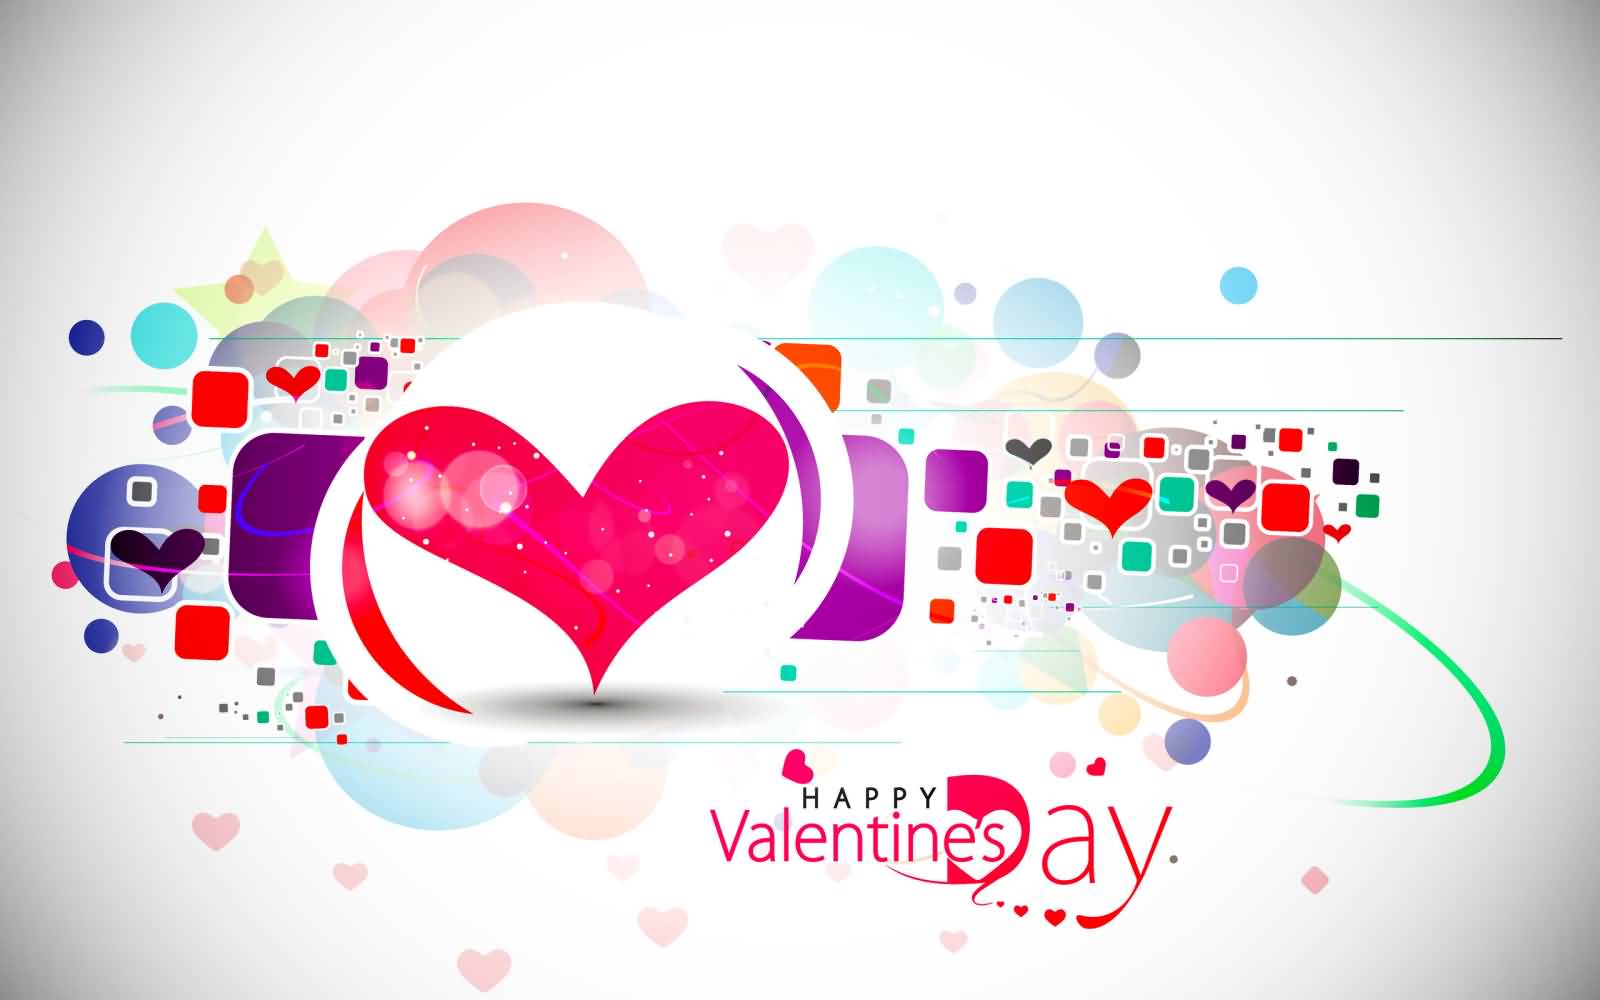 Happy Valentine’s Day Colorful Hearts Wallpaper